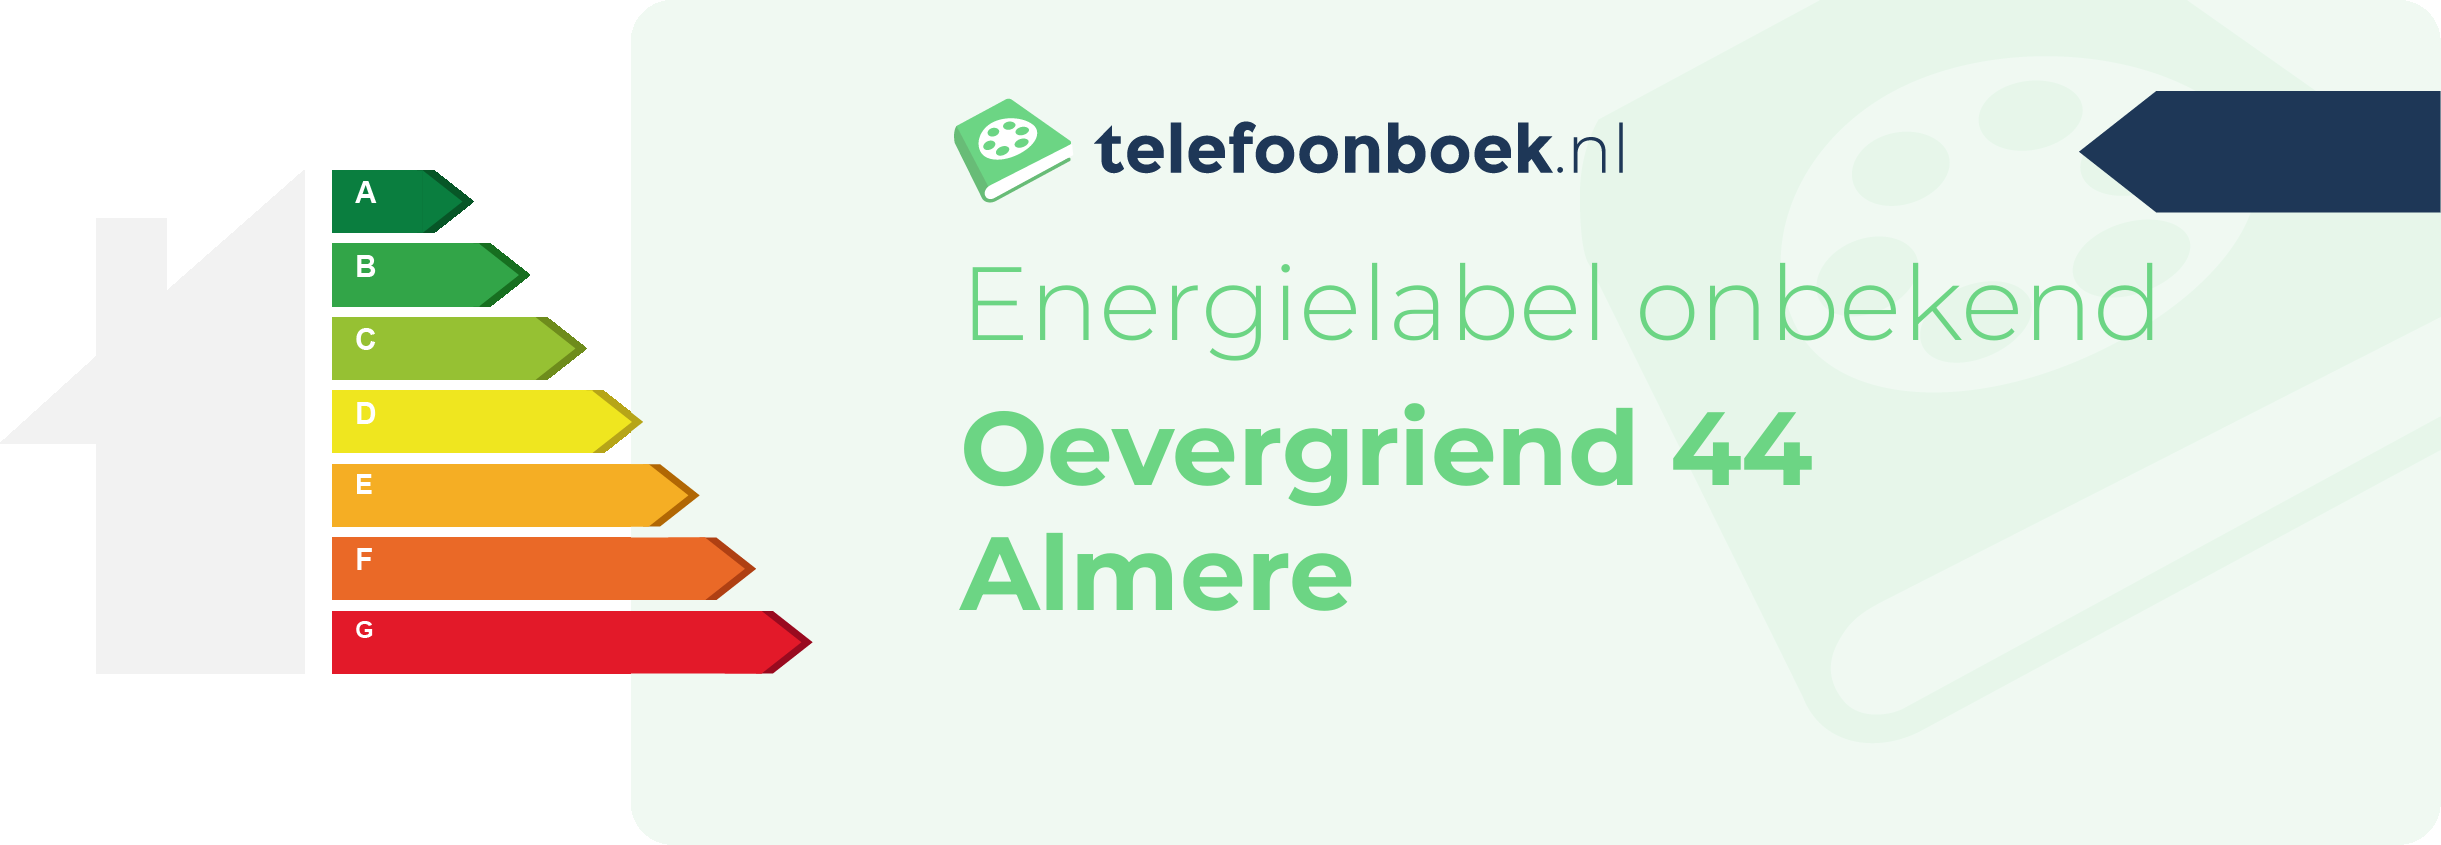 Energielabel Oevergriend 44 Almere